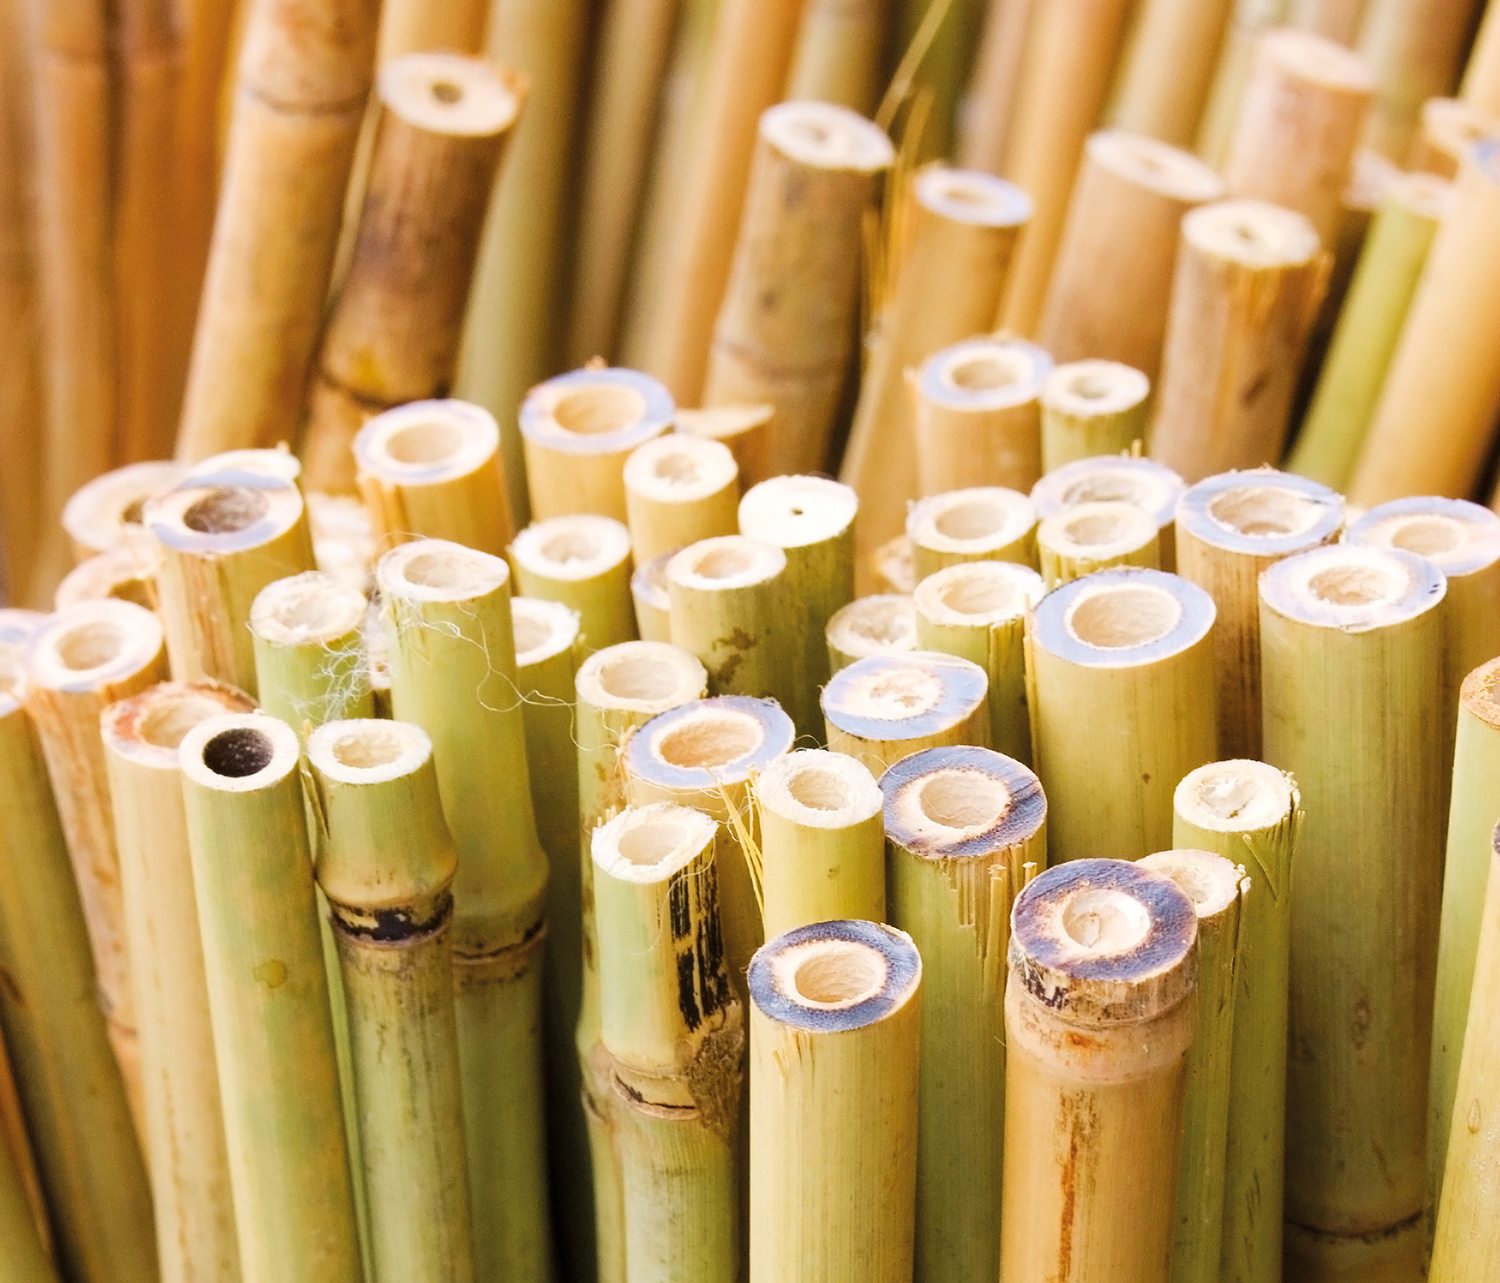 Building bamboo